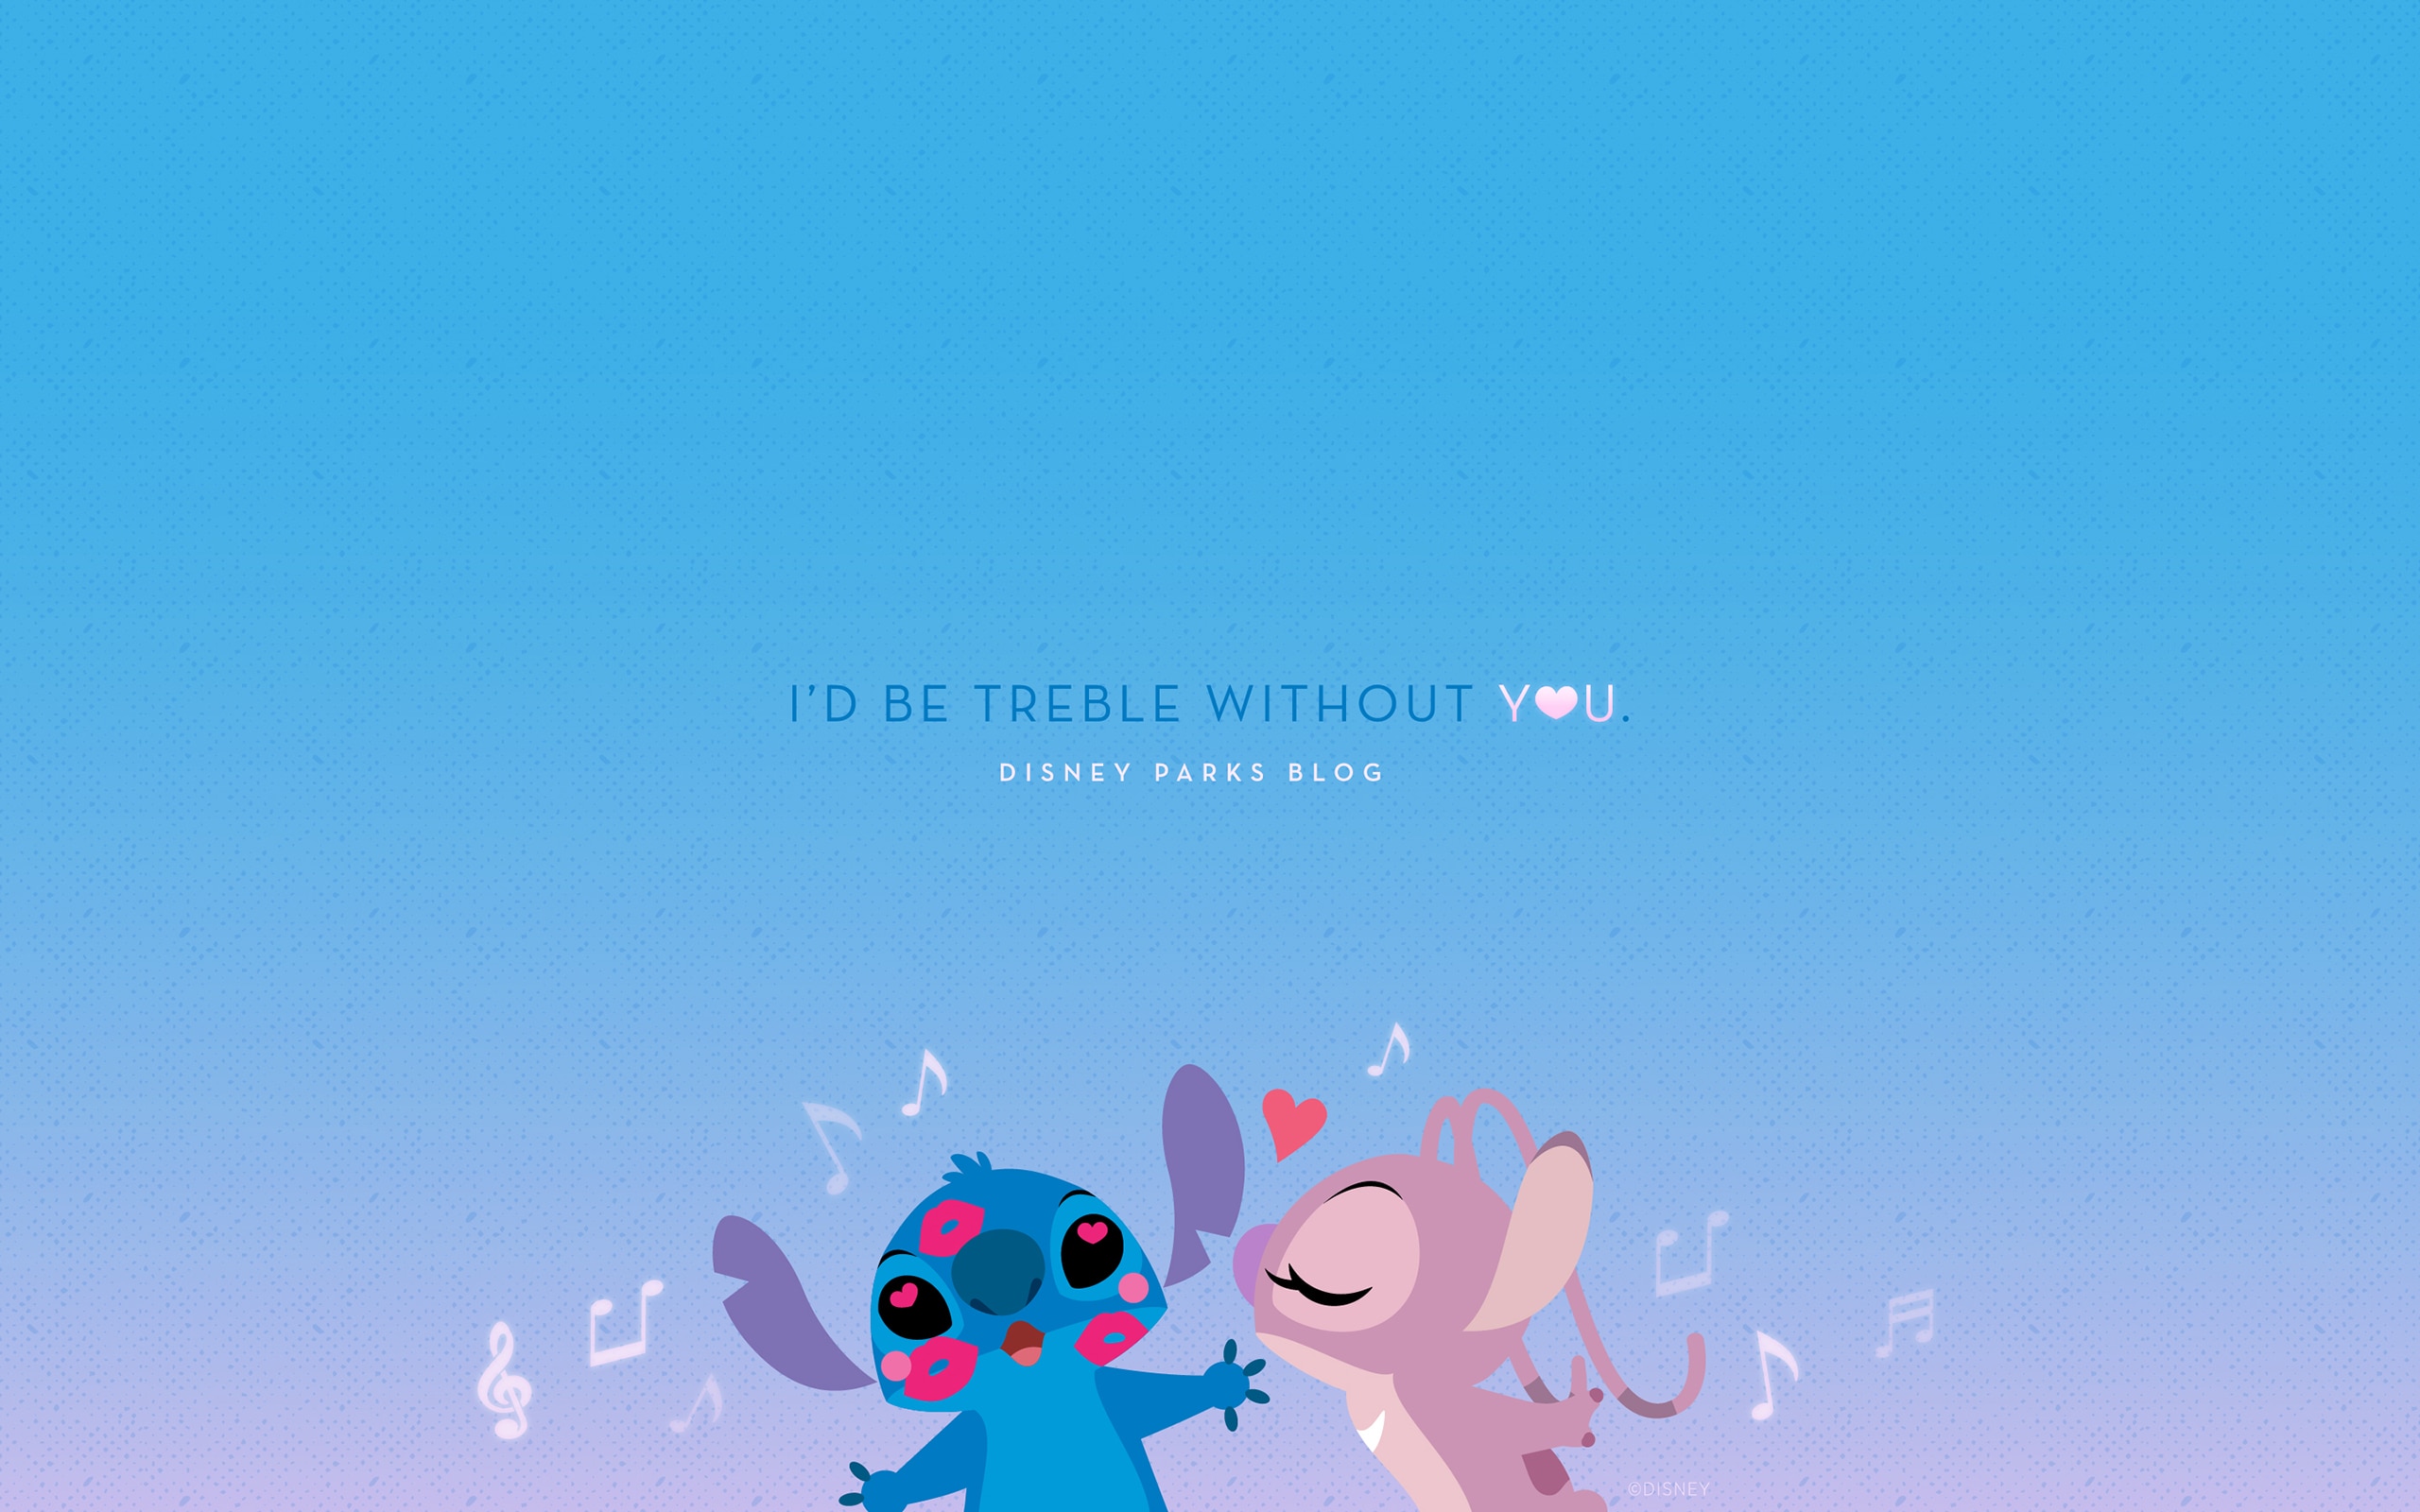 19 Stitch Valentine S Day Wallpaper Desktop Ipad Disney Parks Blog